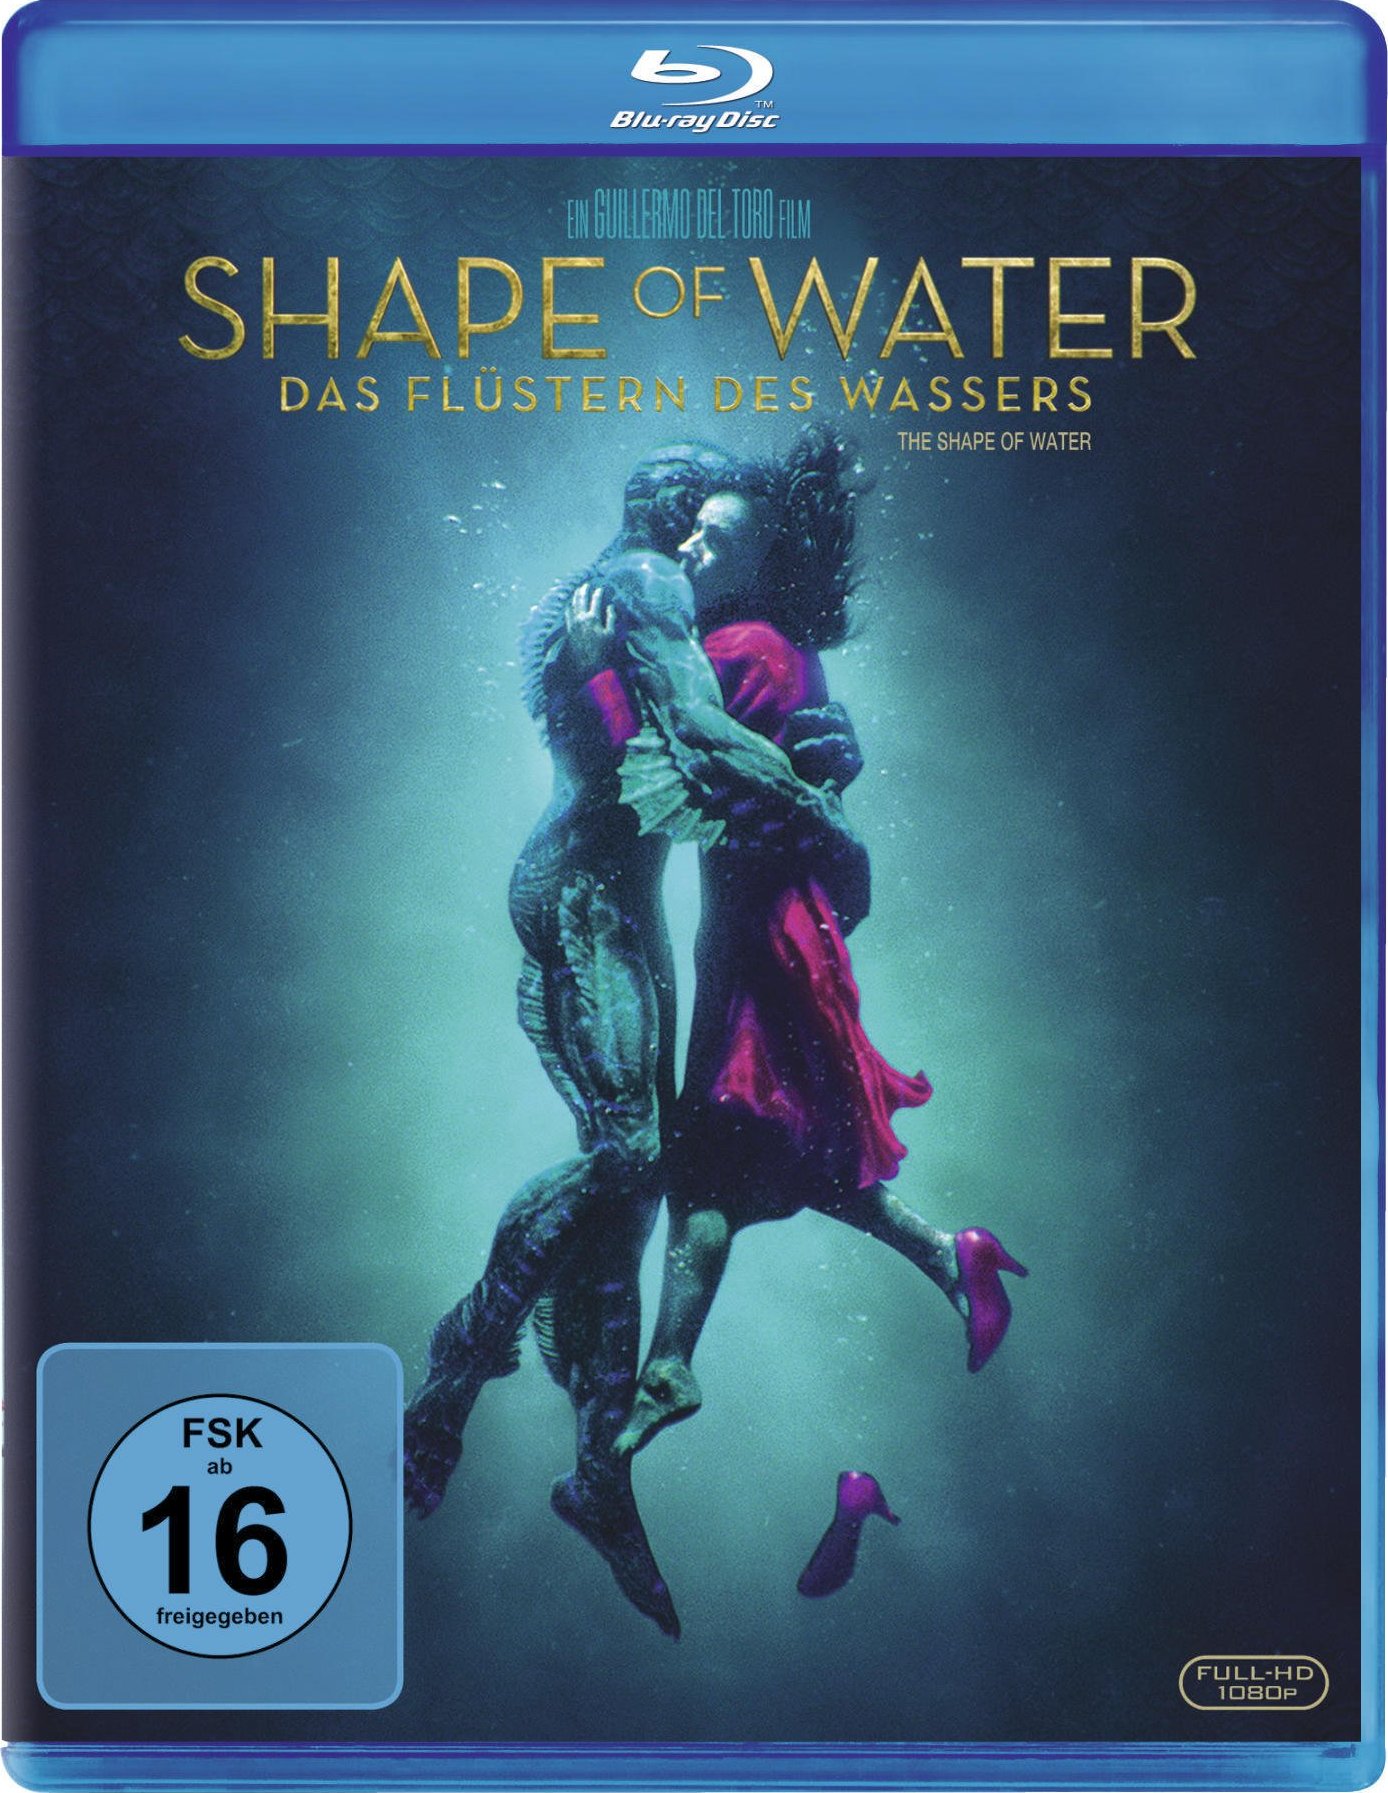 [水形物语].The.Shape.of.Water.2017.UHD.BluRay.2160p.HEVC.DTS-HD.MA.5.1-COASTER   57.31G-2.jpg